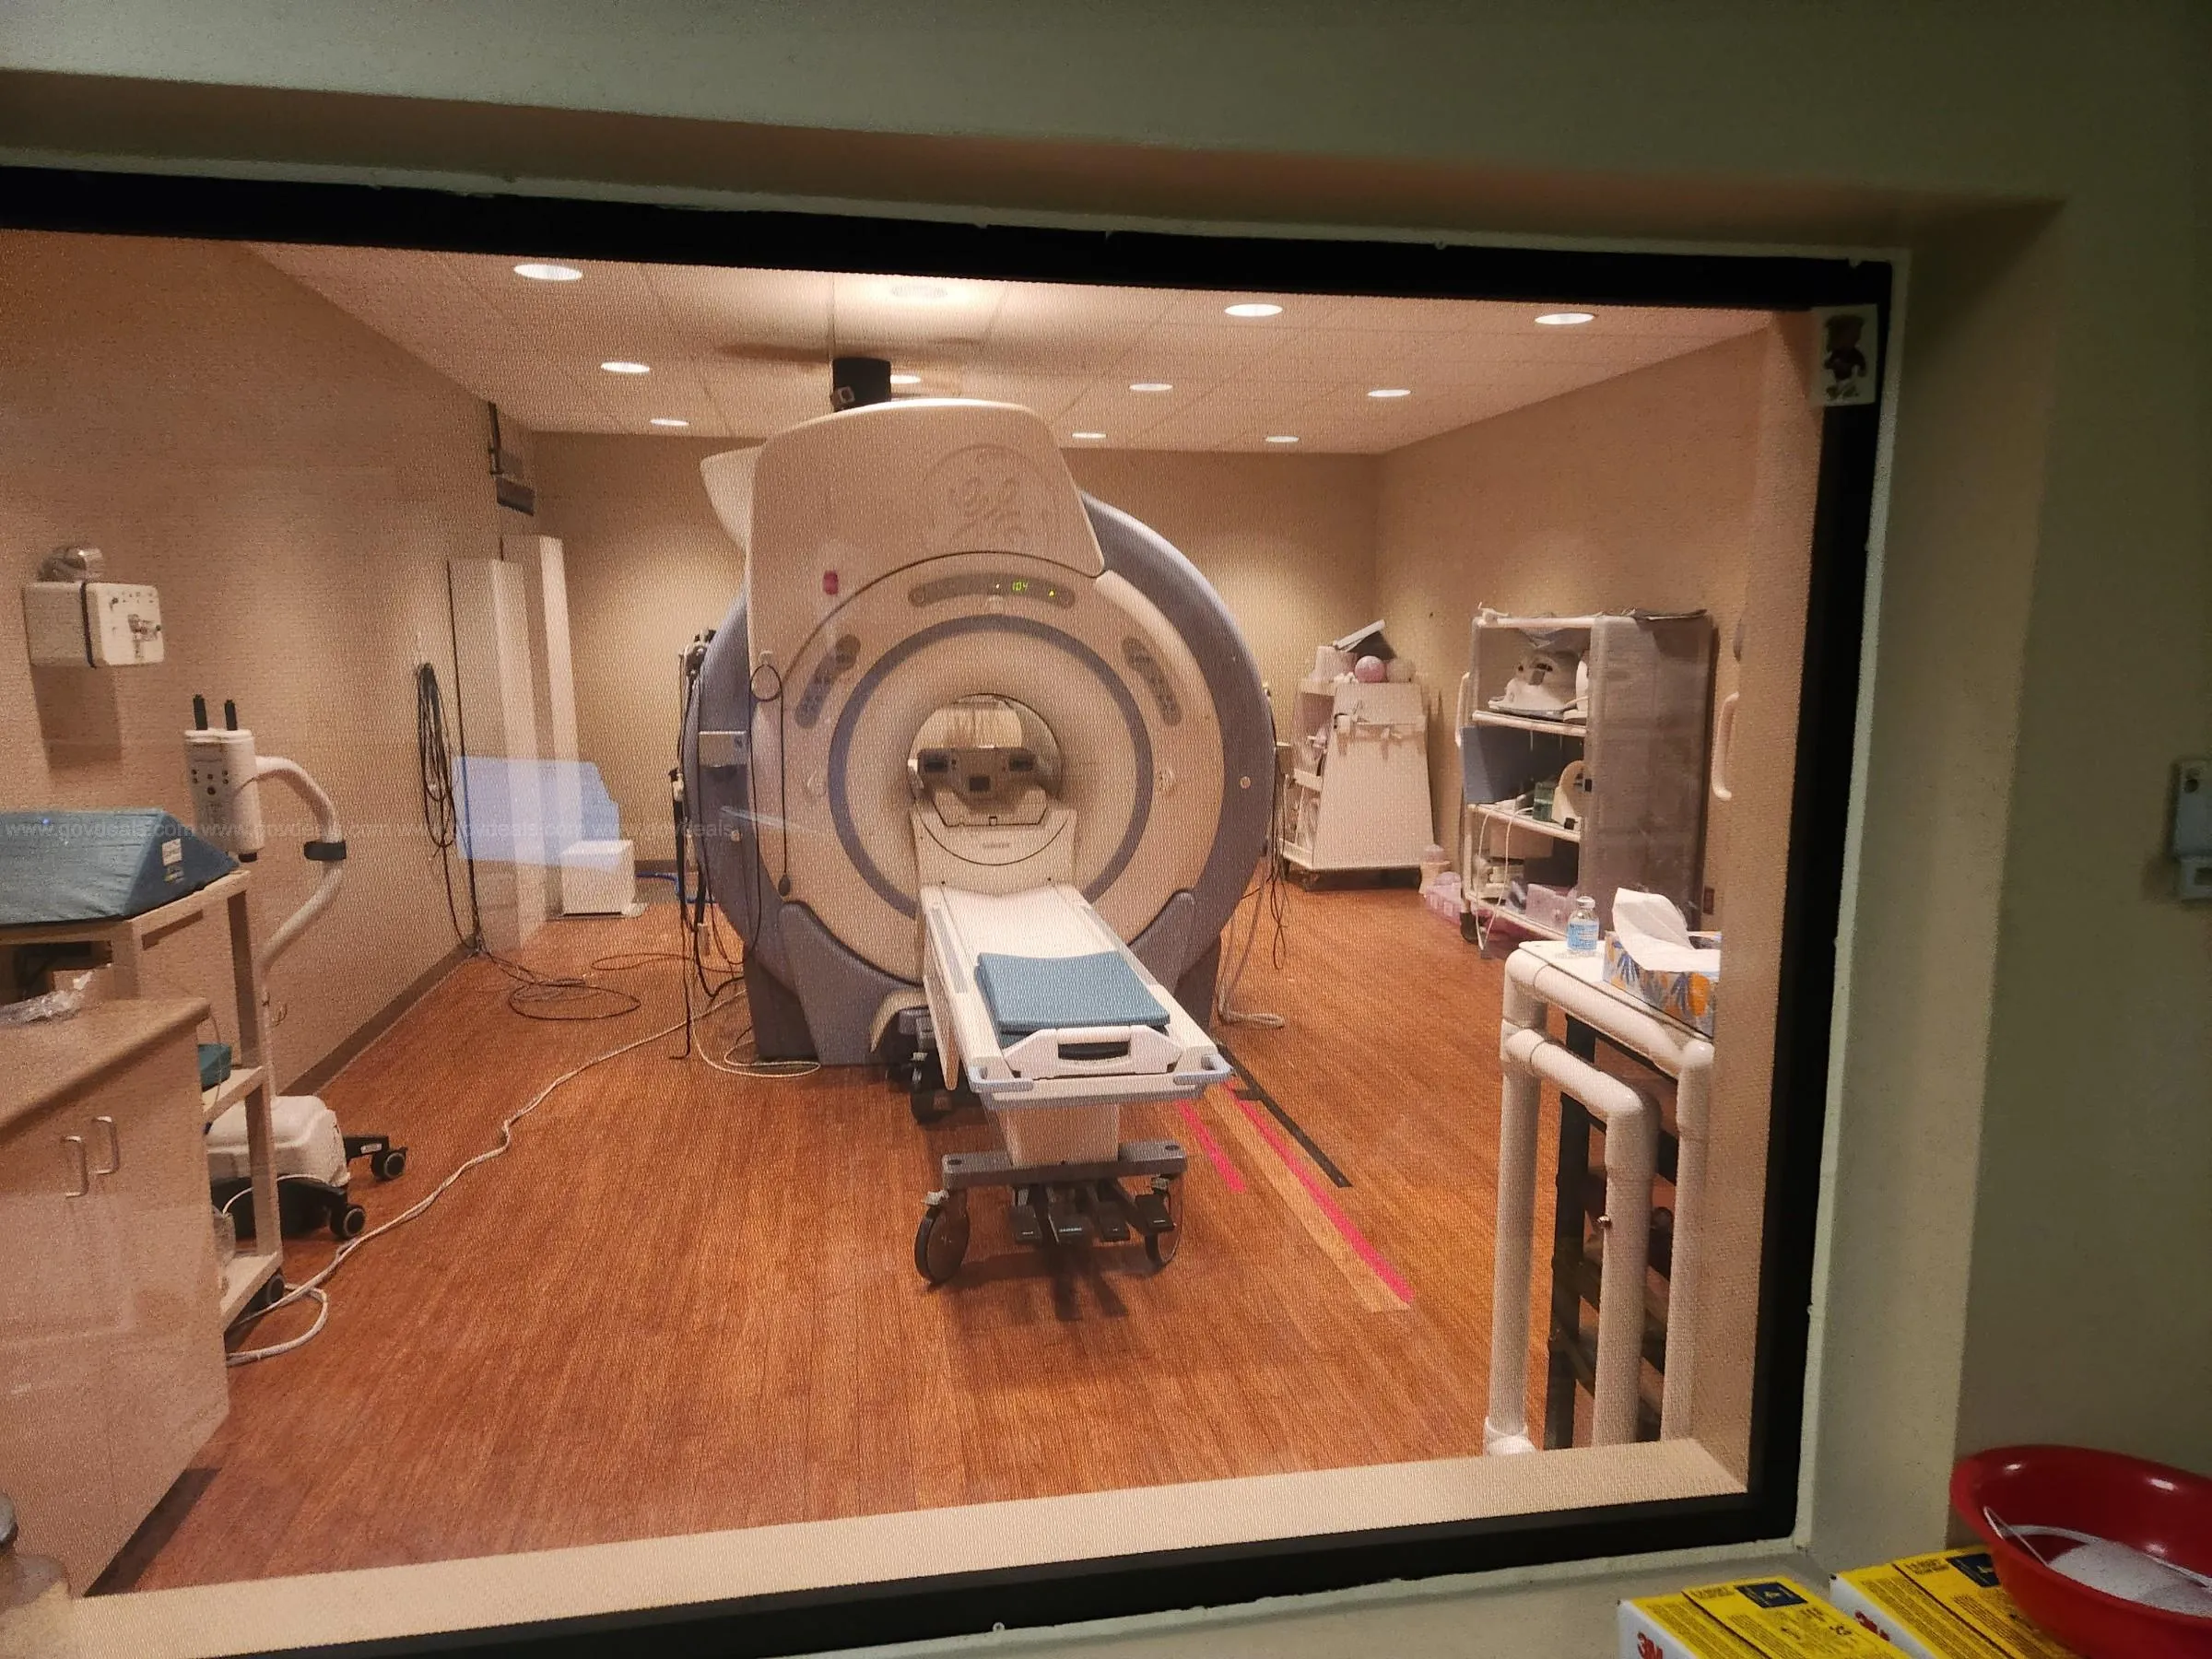 2006 GE MRI Machine with Accessories